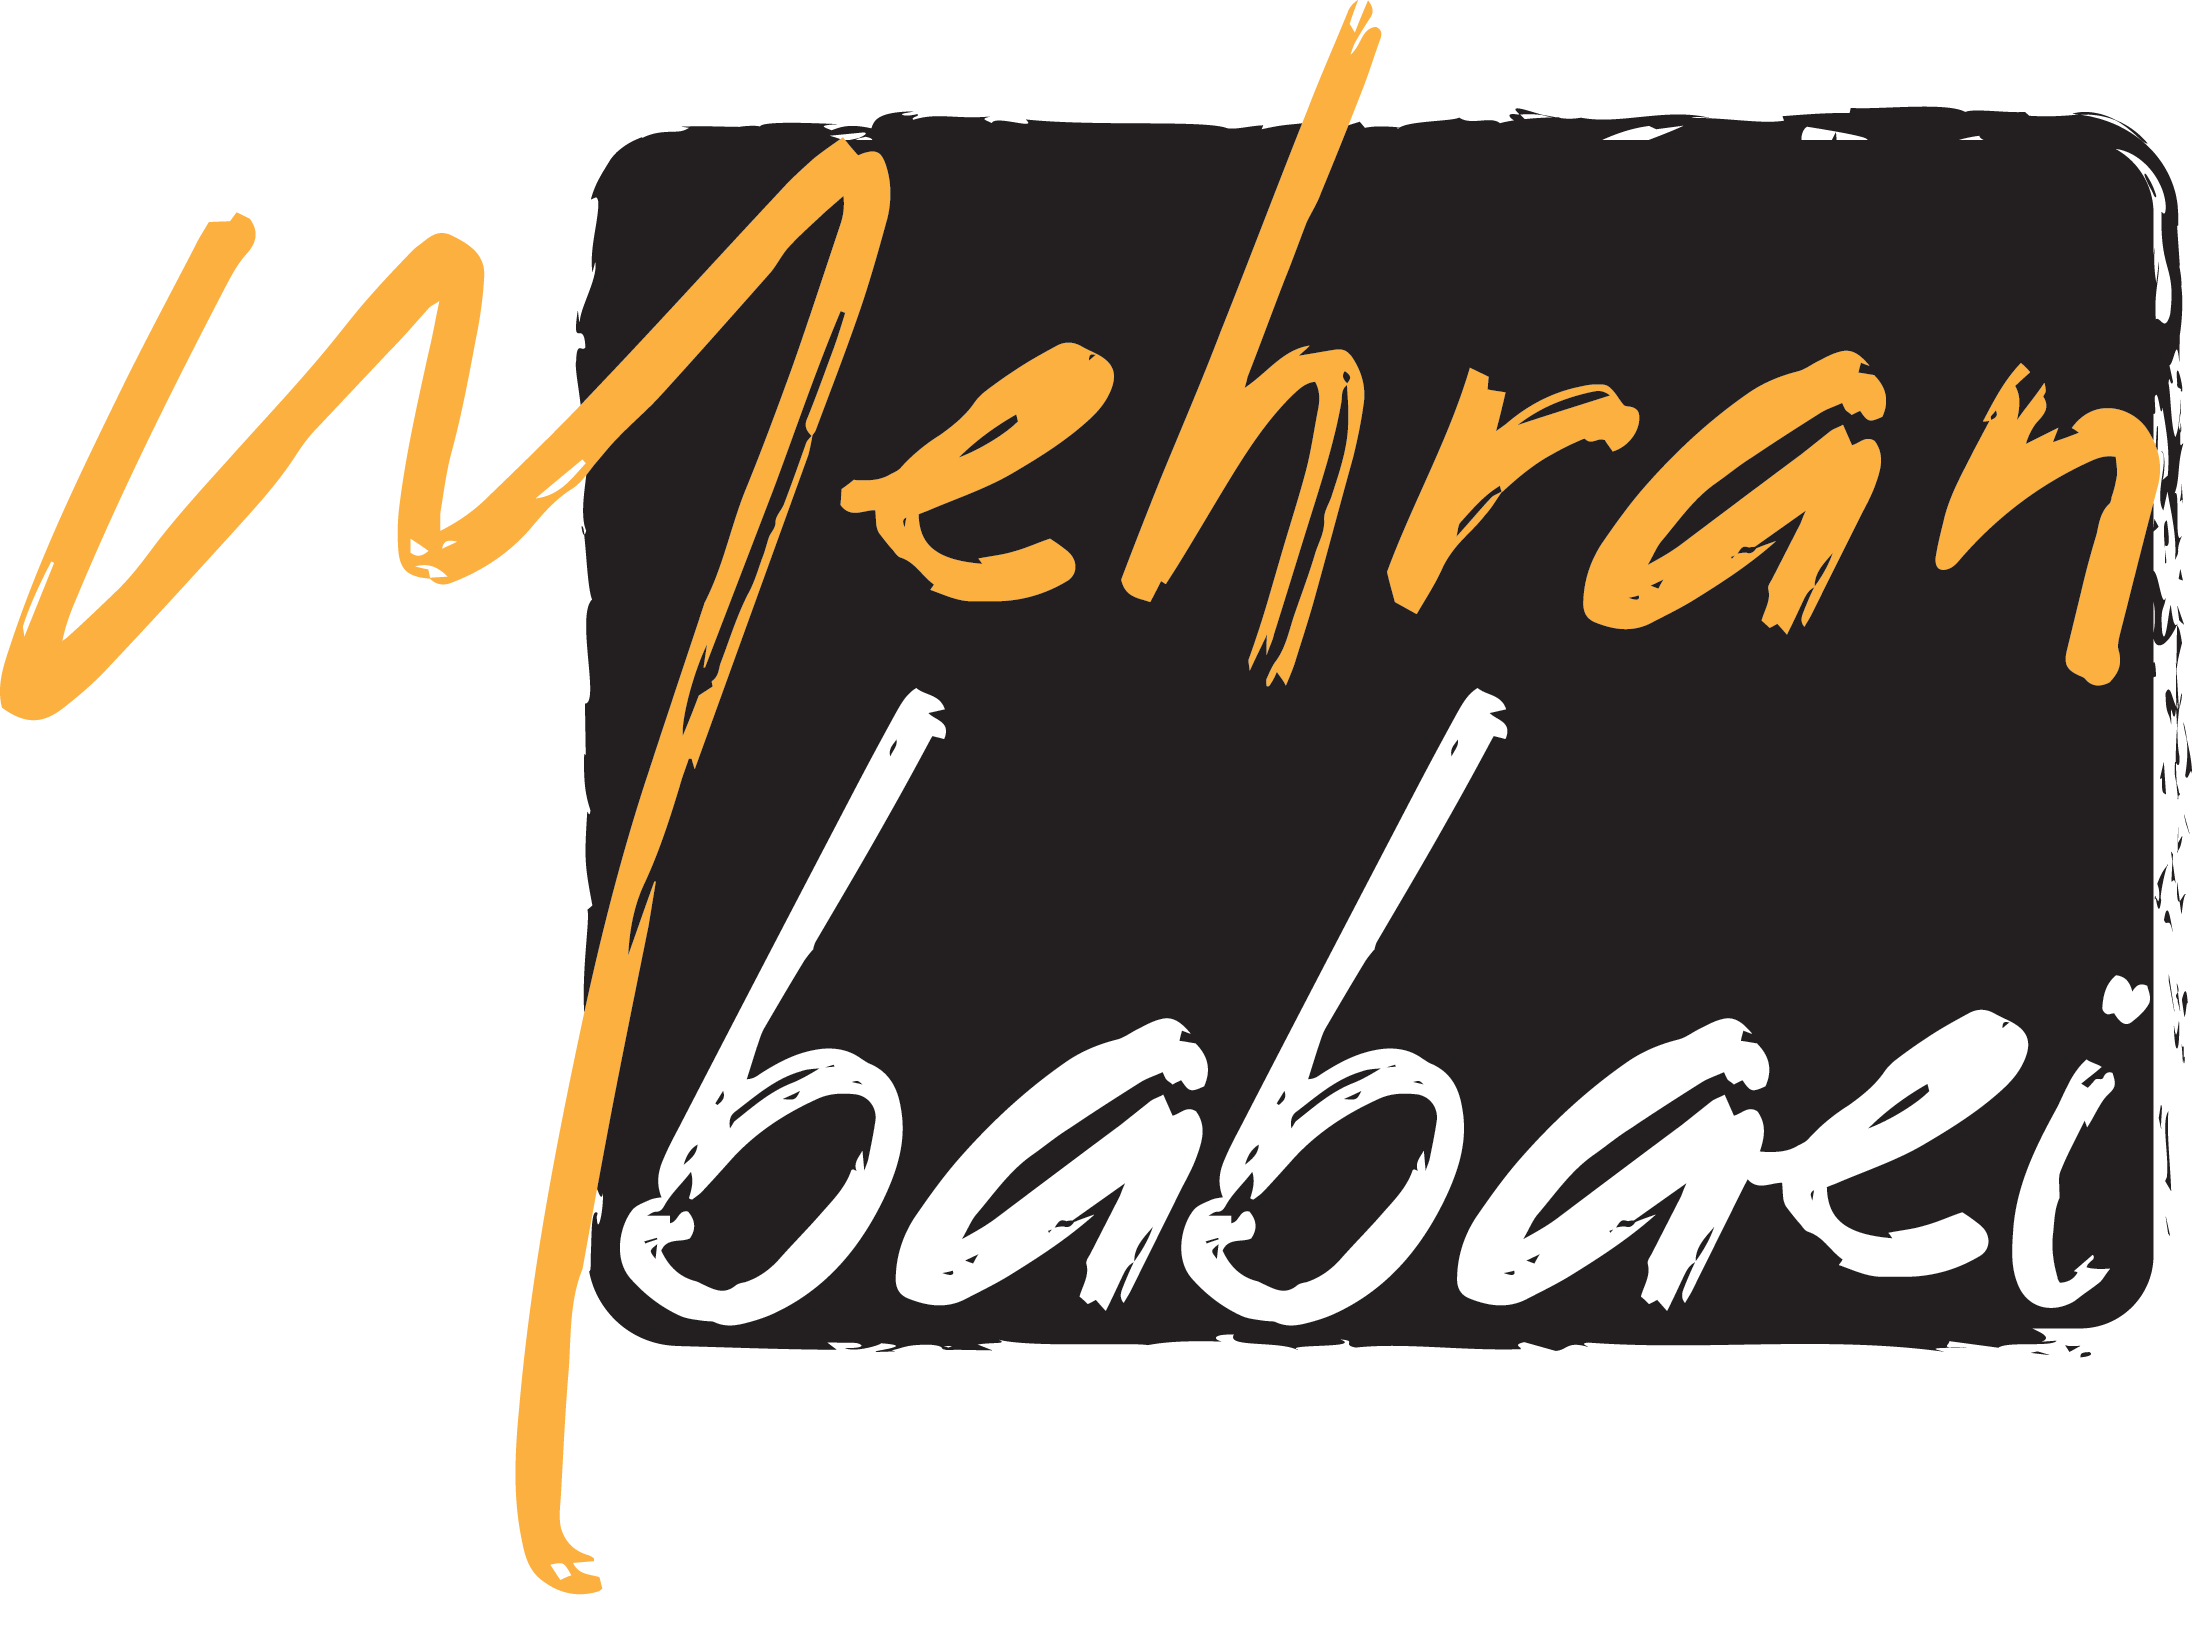 Mehran Babaei| SEO Manager| web designer